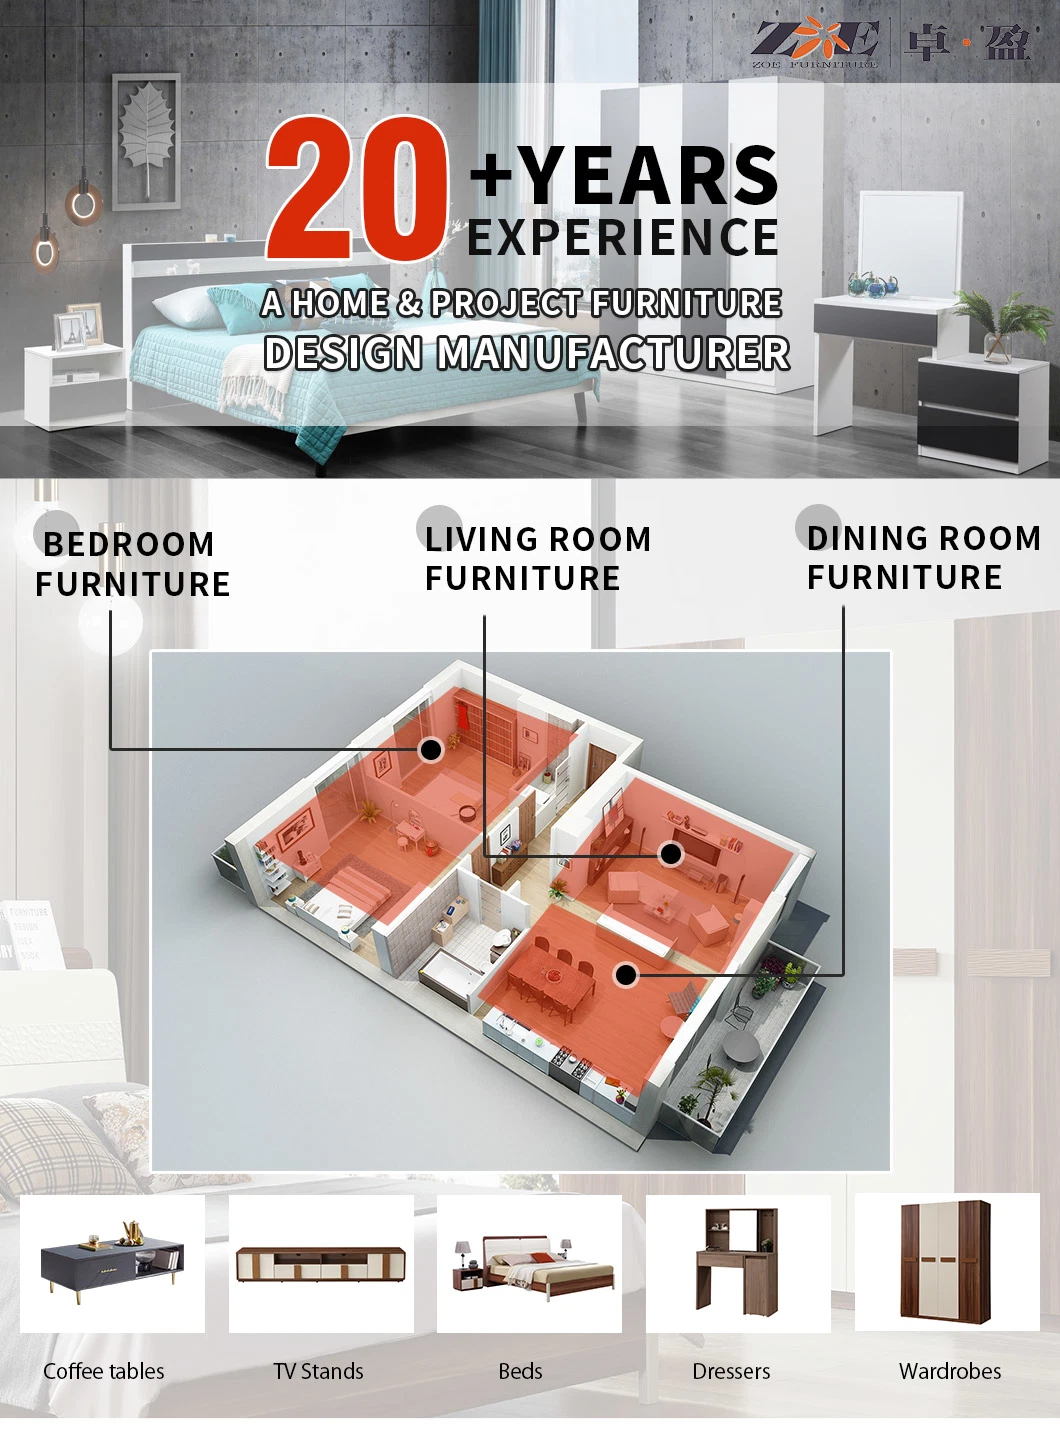 Guangzhou Foshan Modern Luxury Master Full Home Bed Room Furniture Bedroom Set